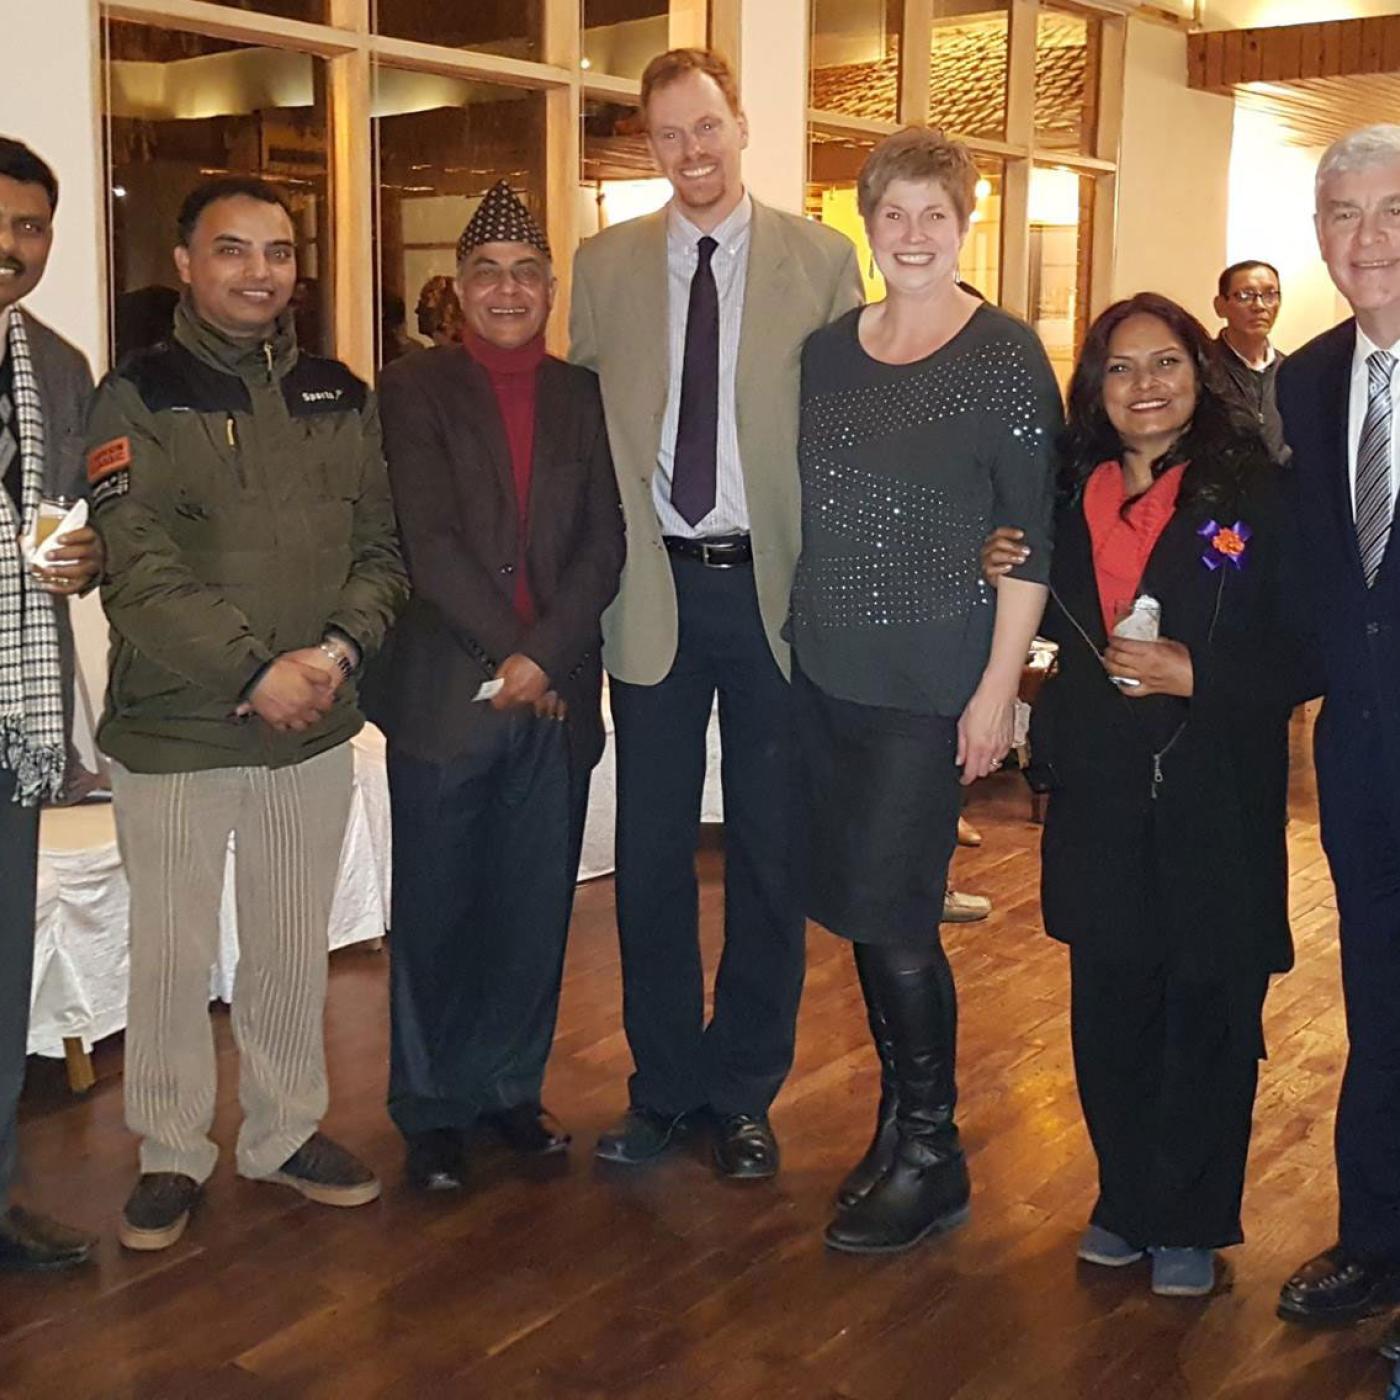 IFES Anniversary in Nepal Group Photo